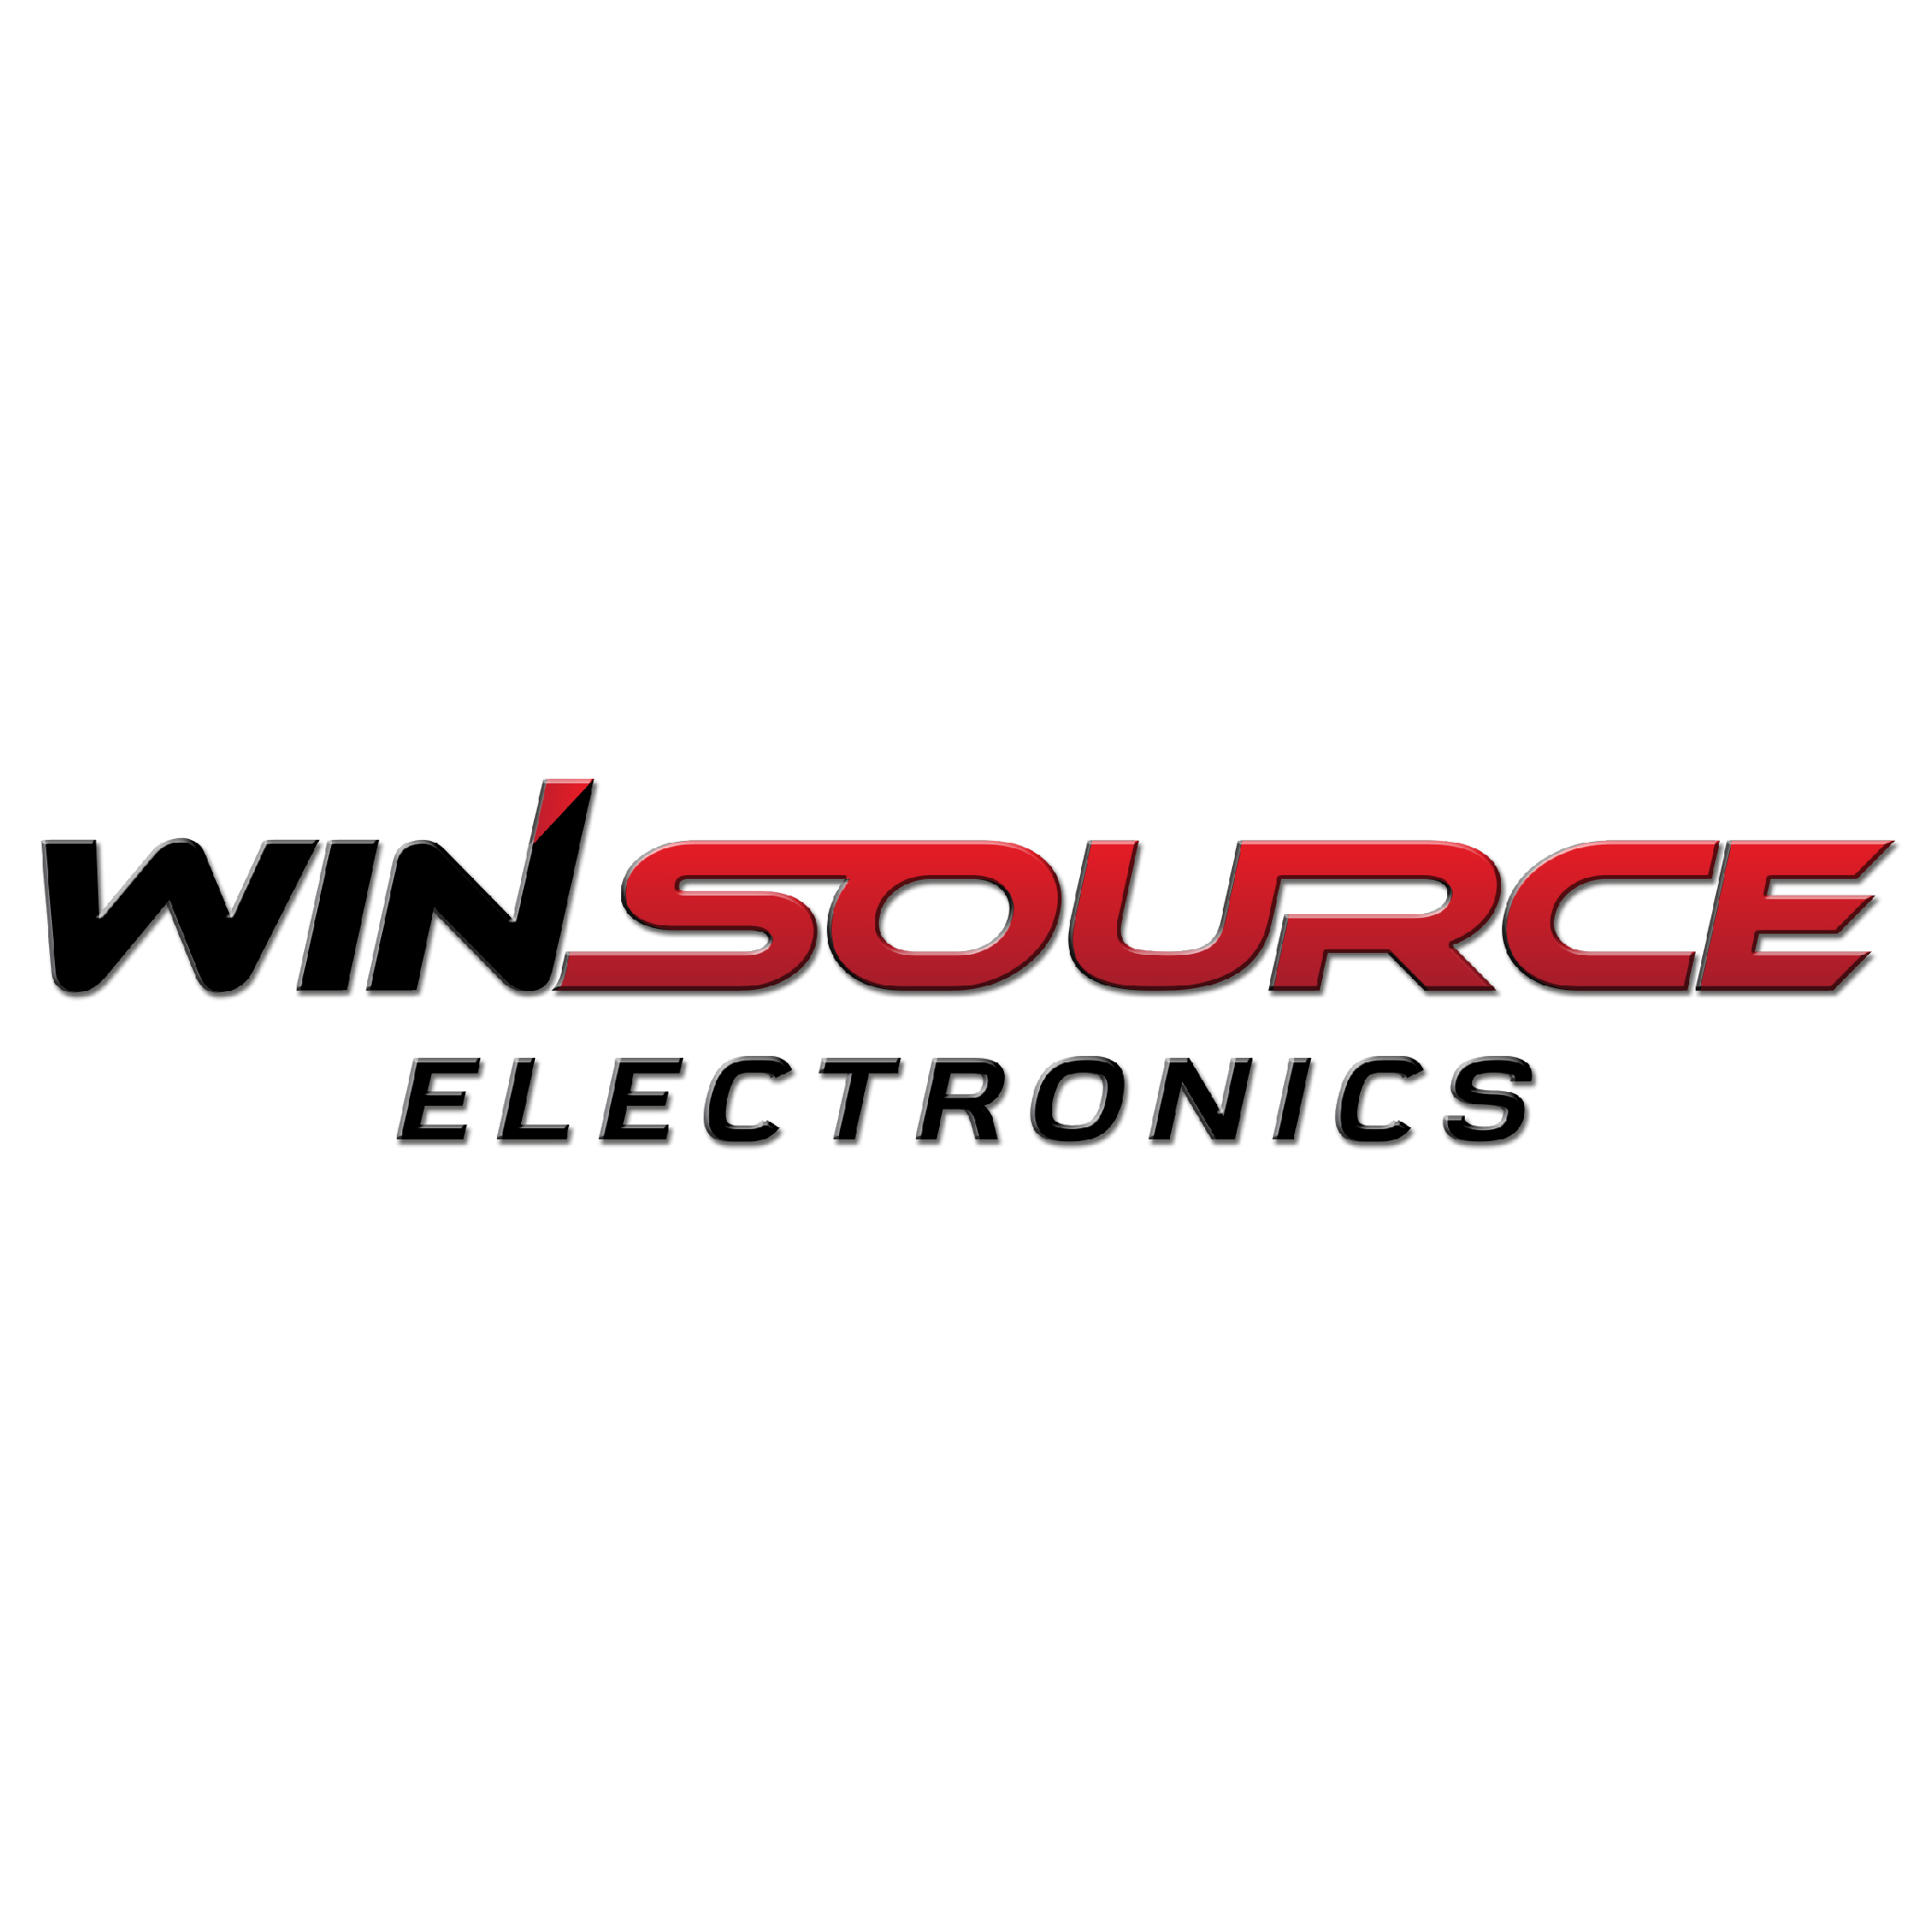 Win Source Electronics LOGO